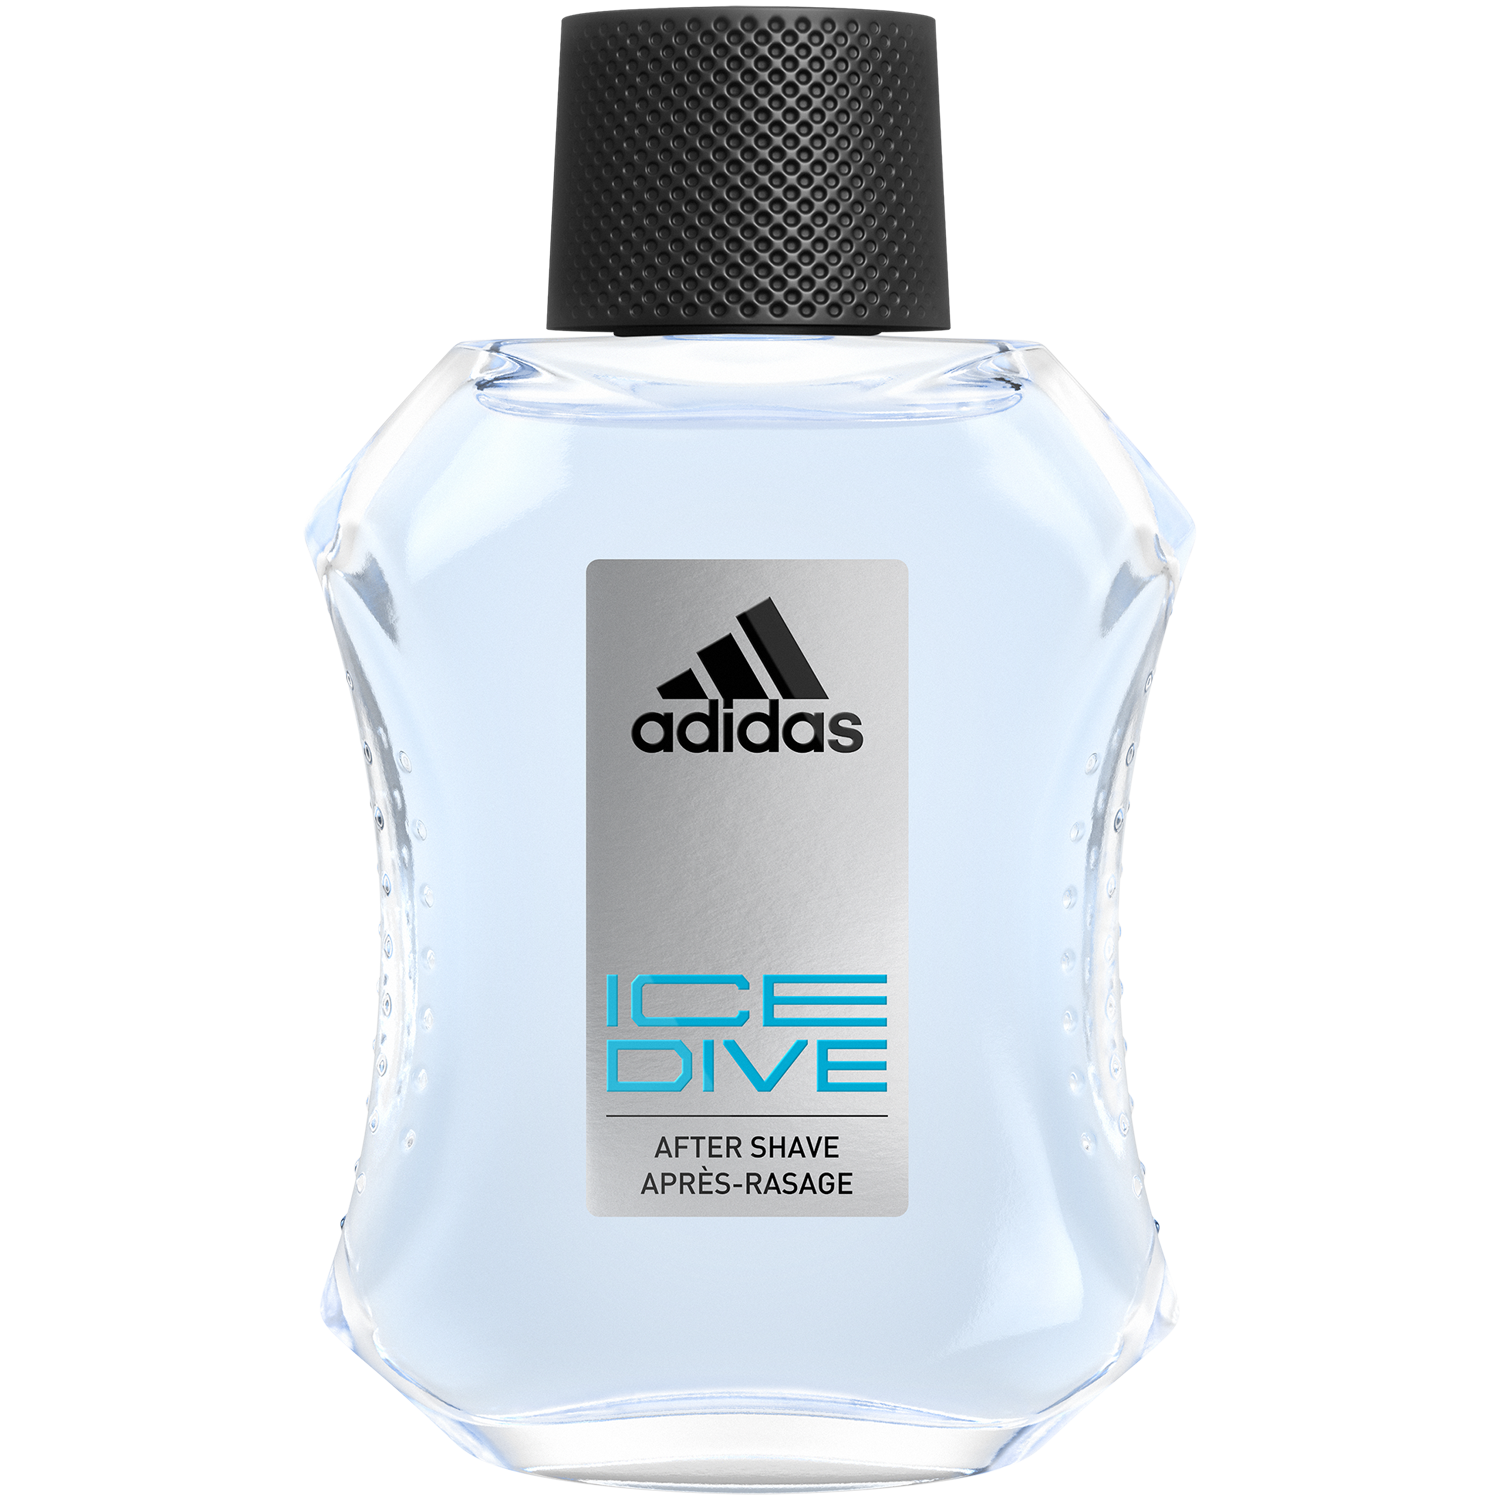 Adidas Ice Dive лосьон после бритья для мужчин, 100 мл мужская парфюмерия adidas лосьон после бритья ice dive